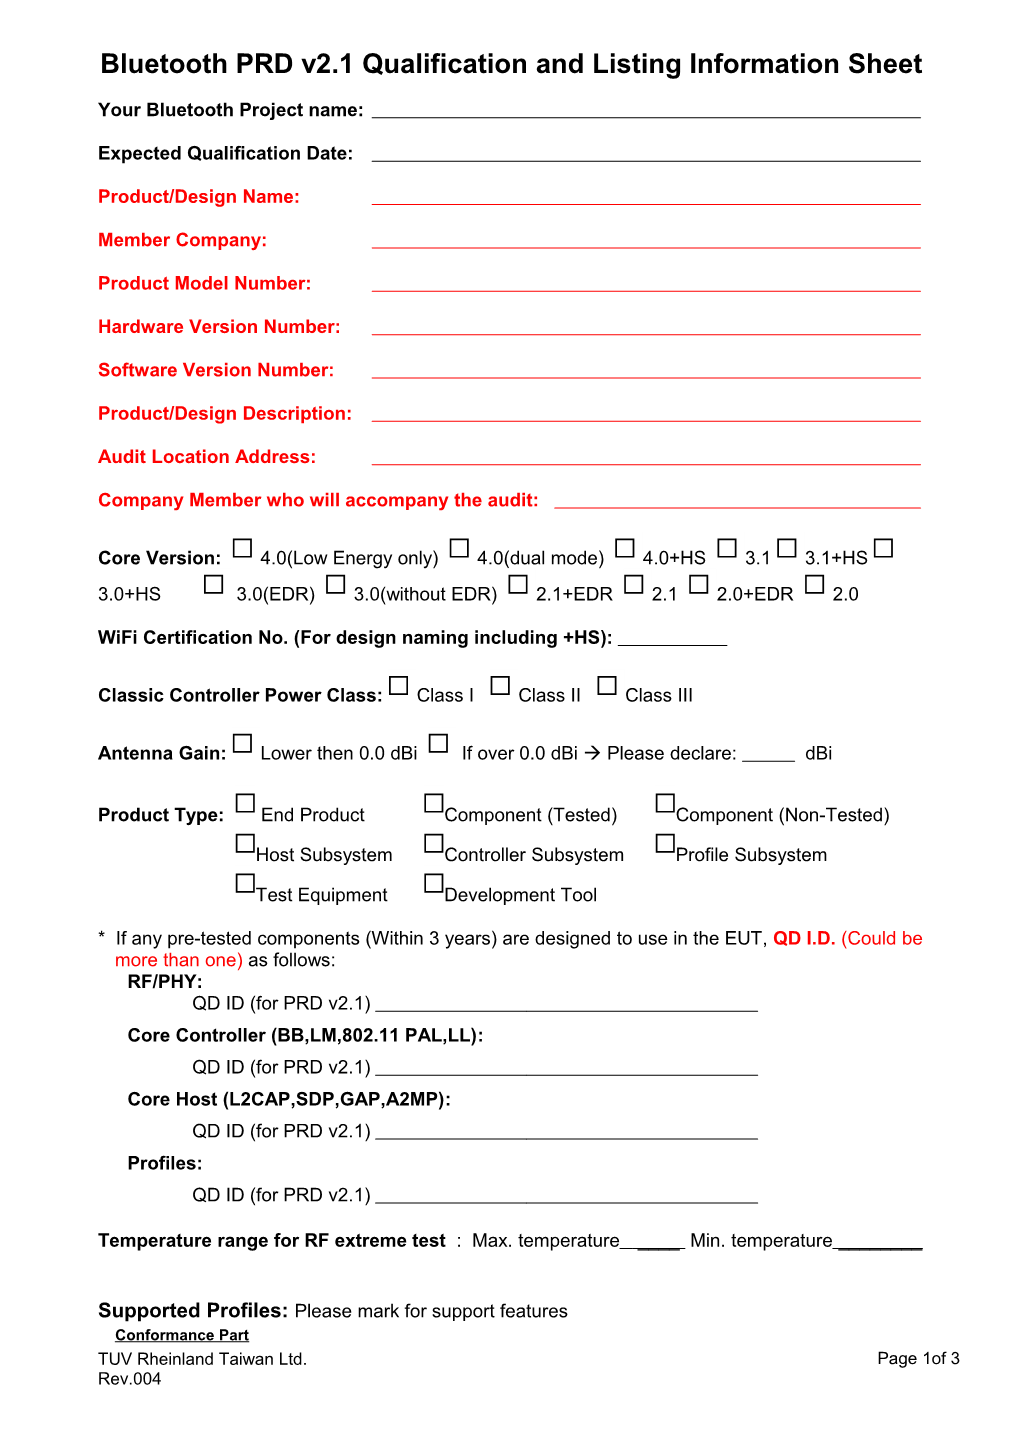 Bluetooth Information Form Sheet